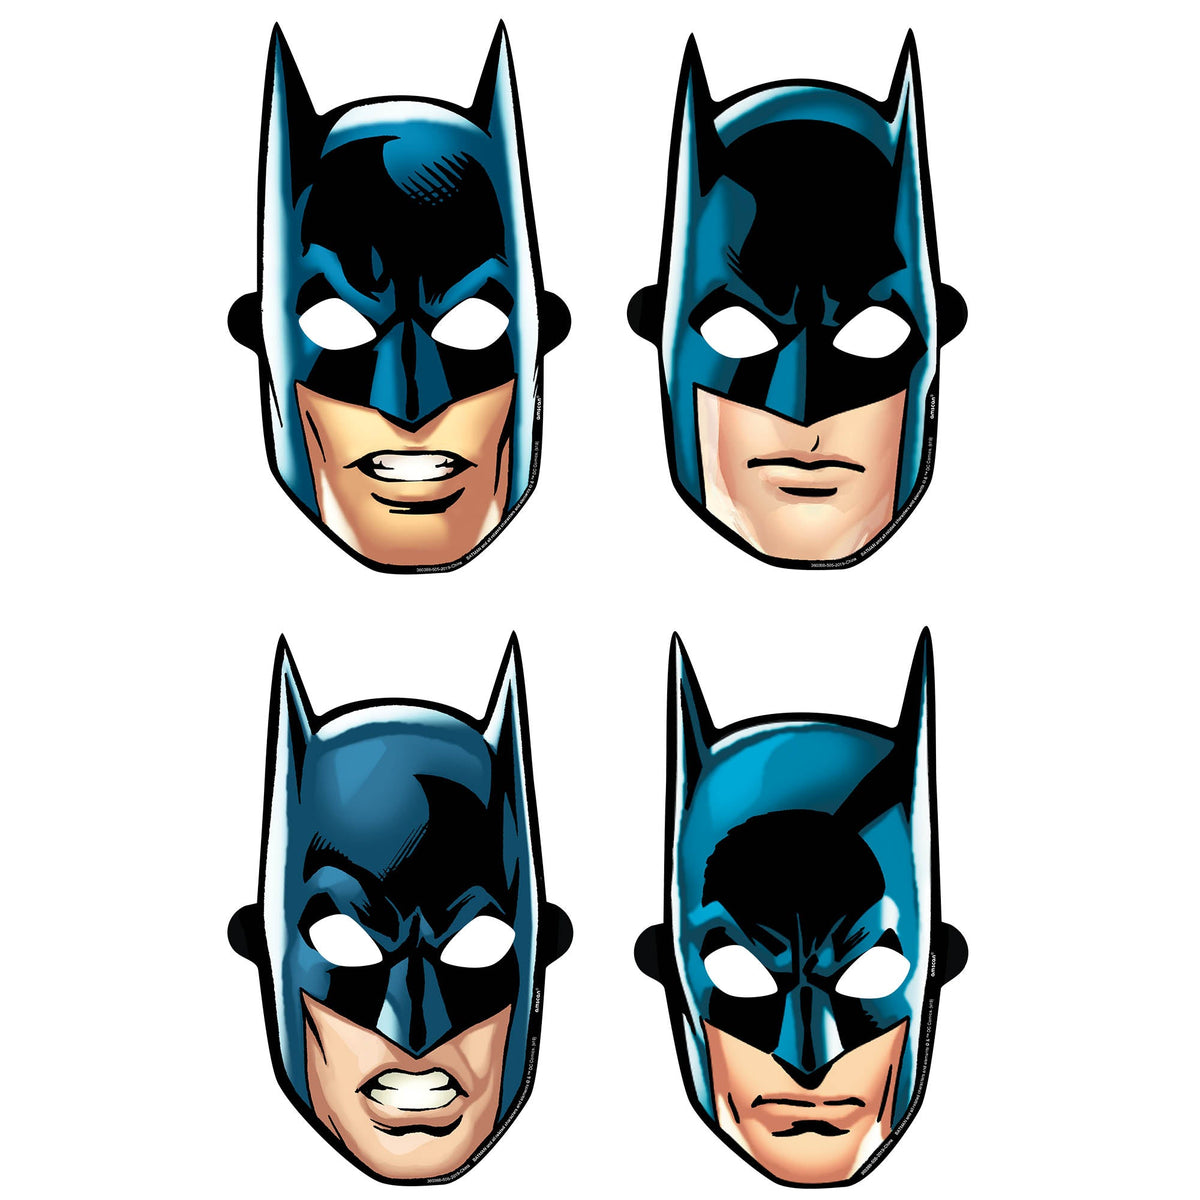 Batman™ Heroes Unite package of 8 Paper Character Masks